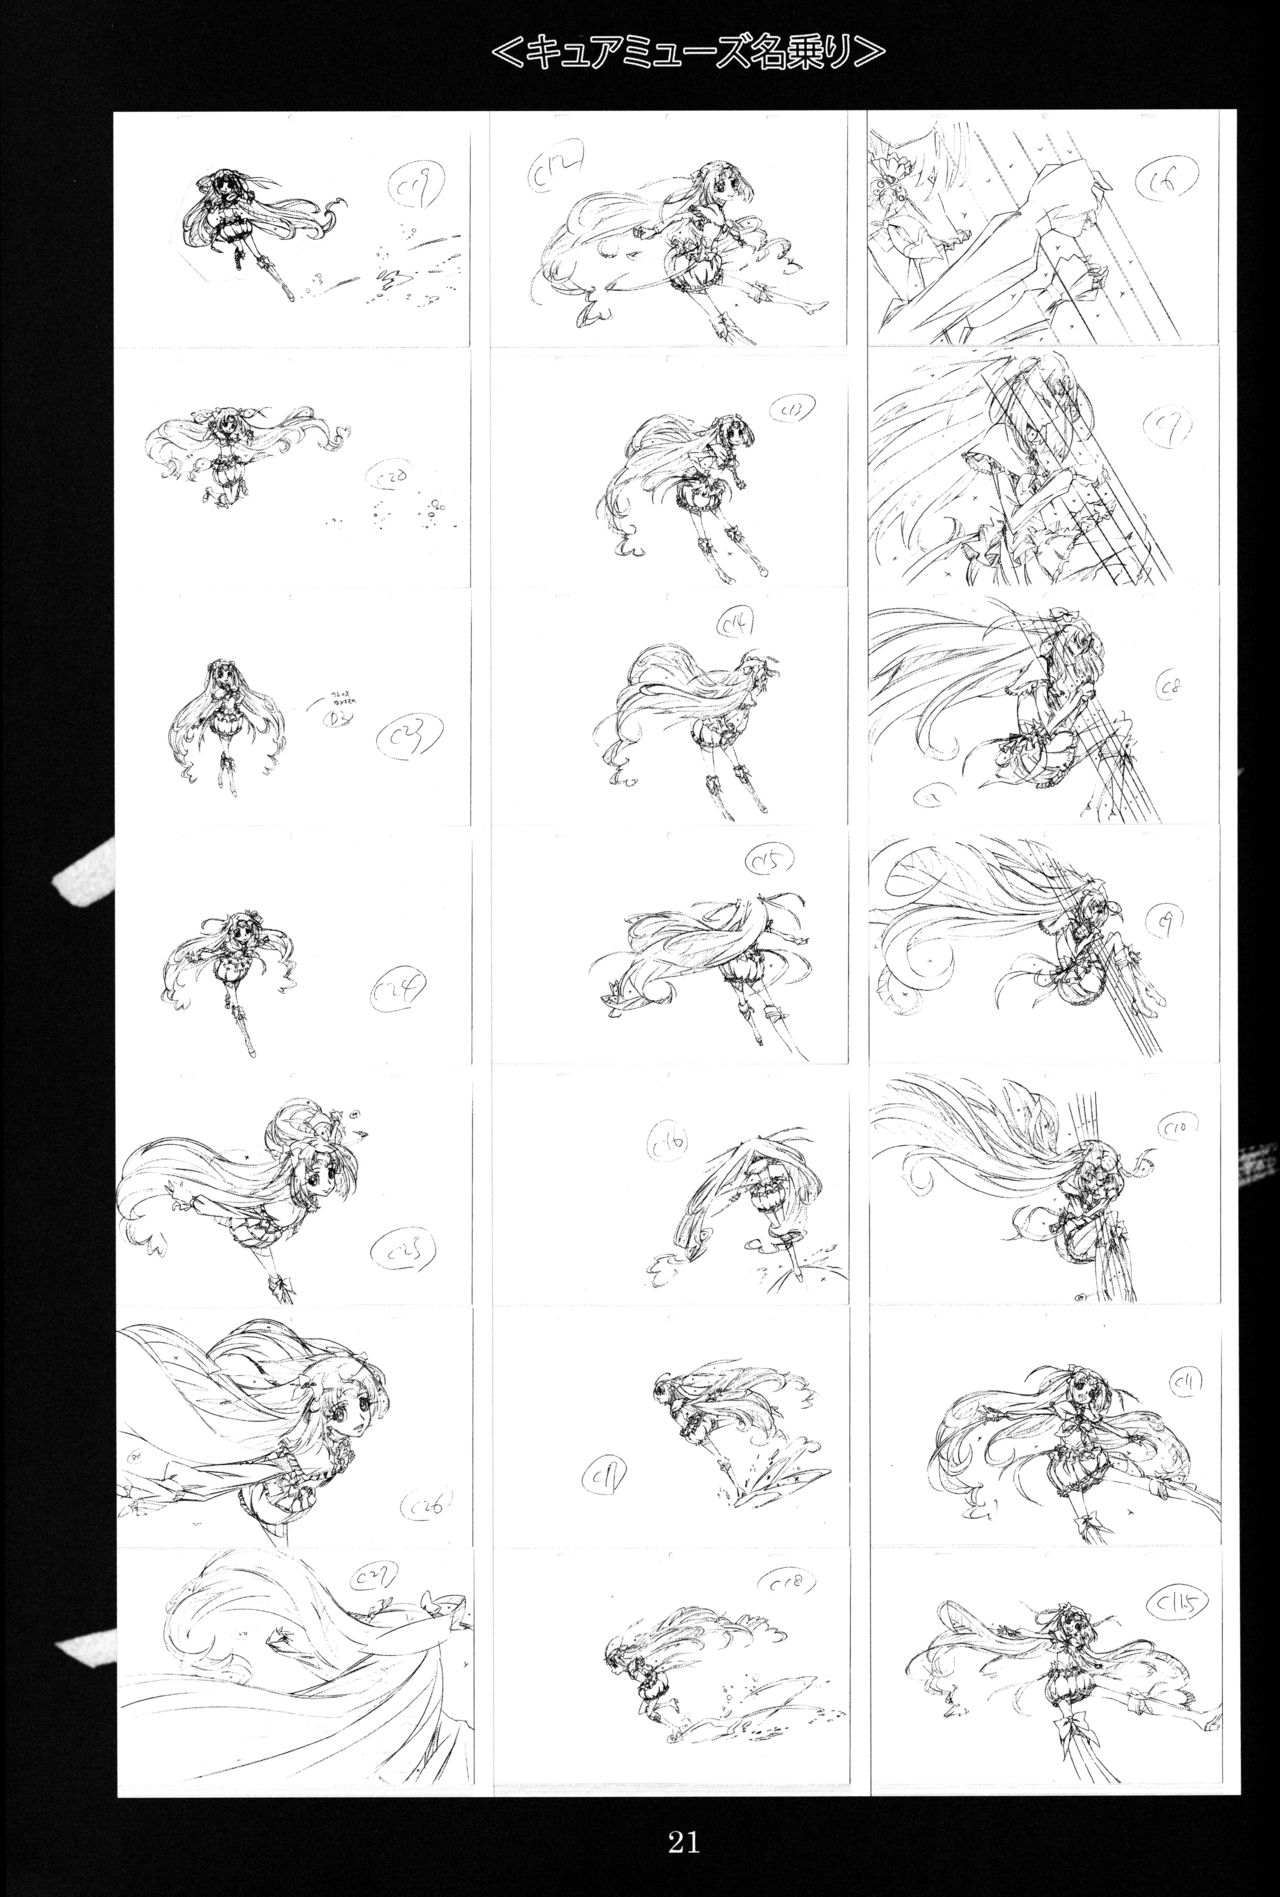 Burning G: Yosuke Kabashima Animator 20th Anniversary Book 19